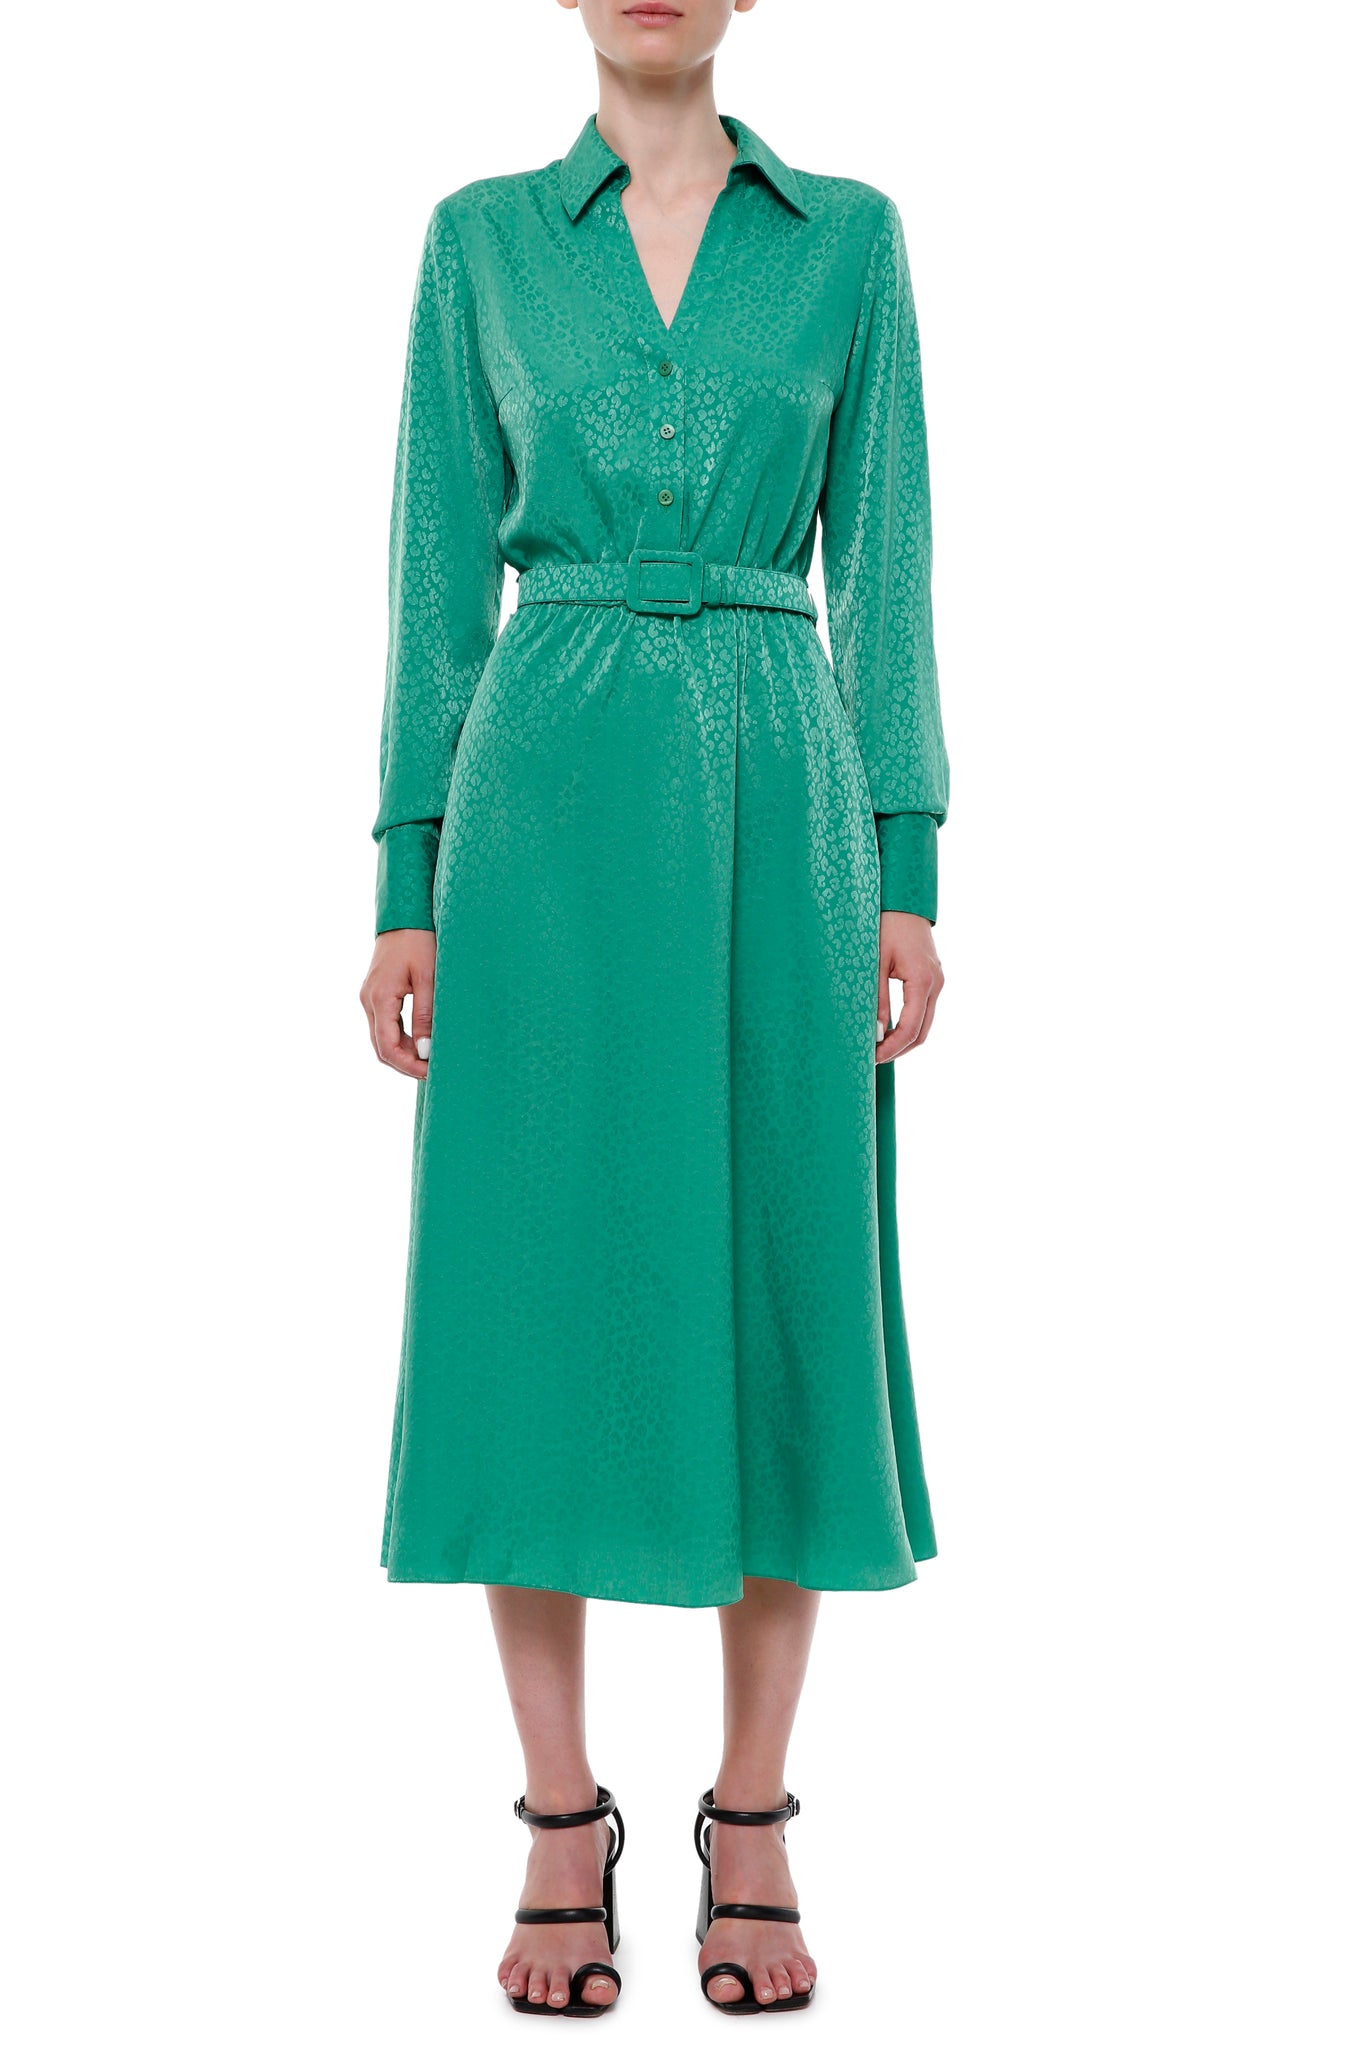 Green jacquard dress